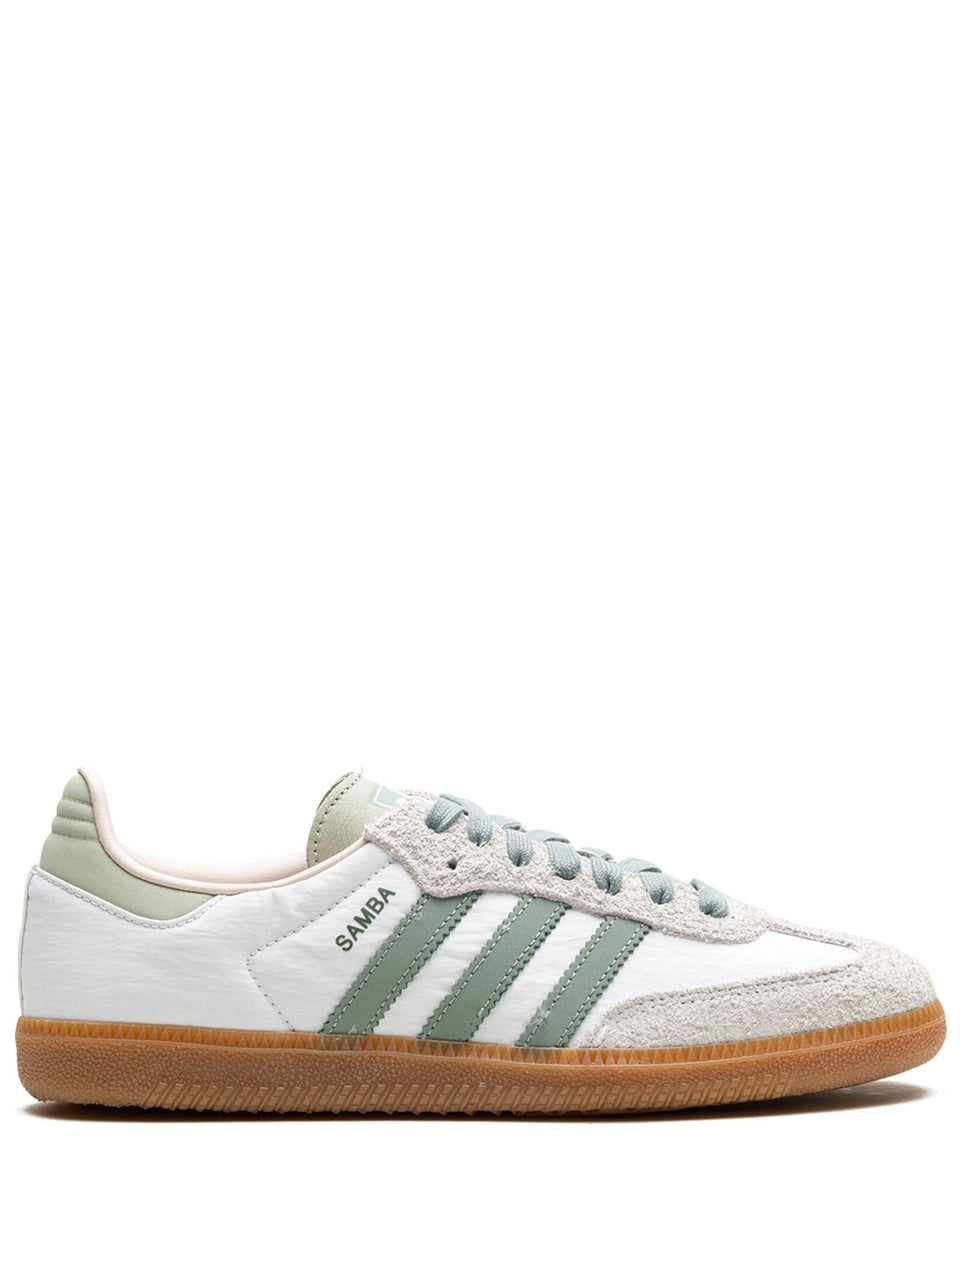 Adidas W Samba OG - Silver Green